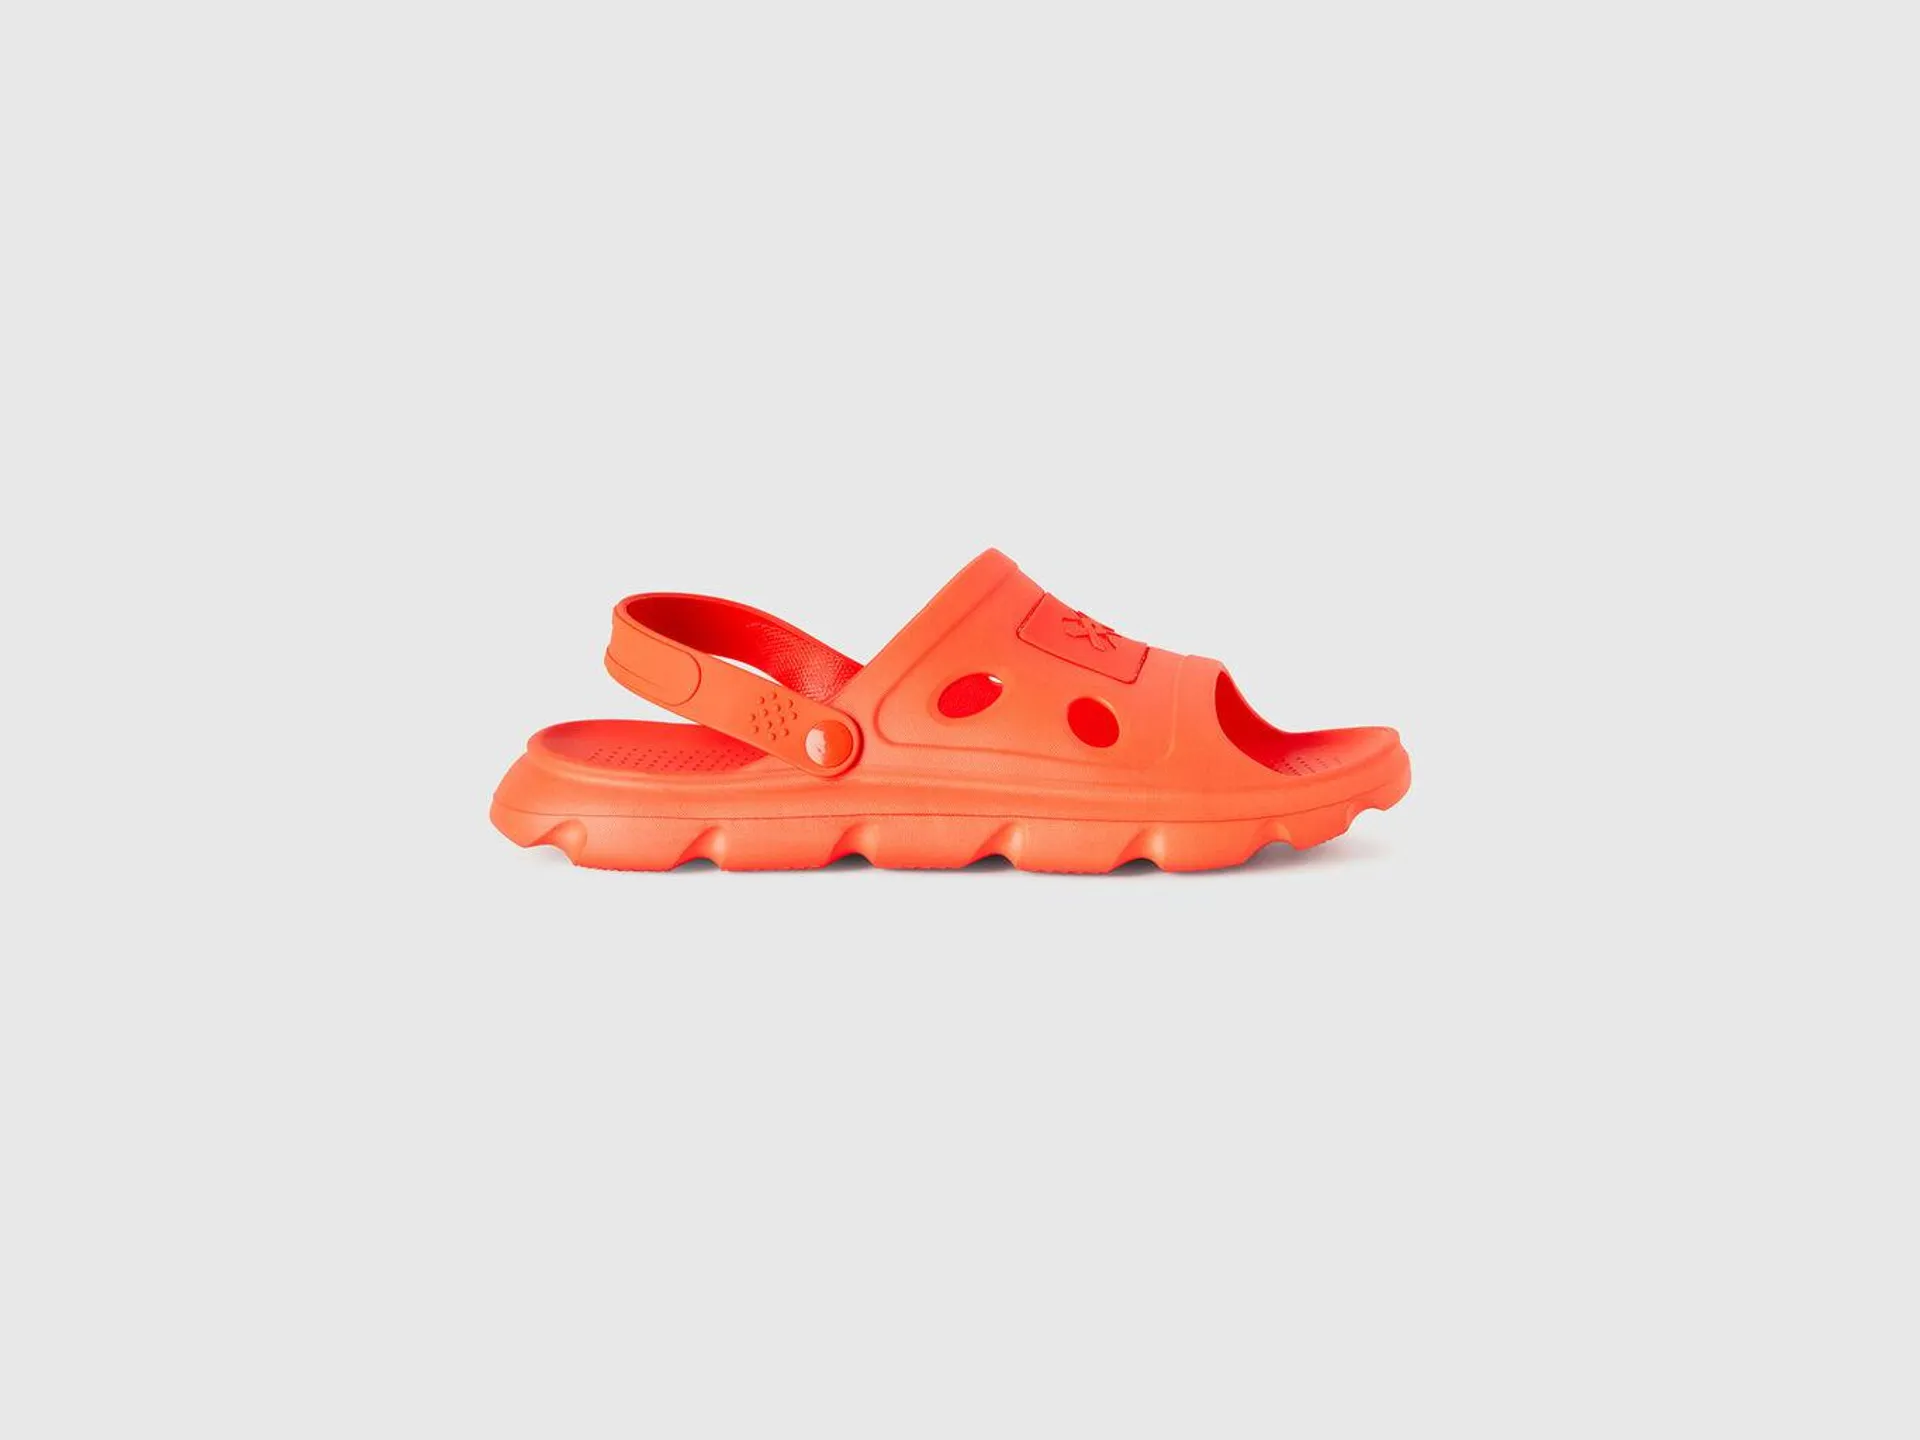 Sandali arancioni in gomma leggera